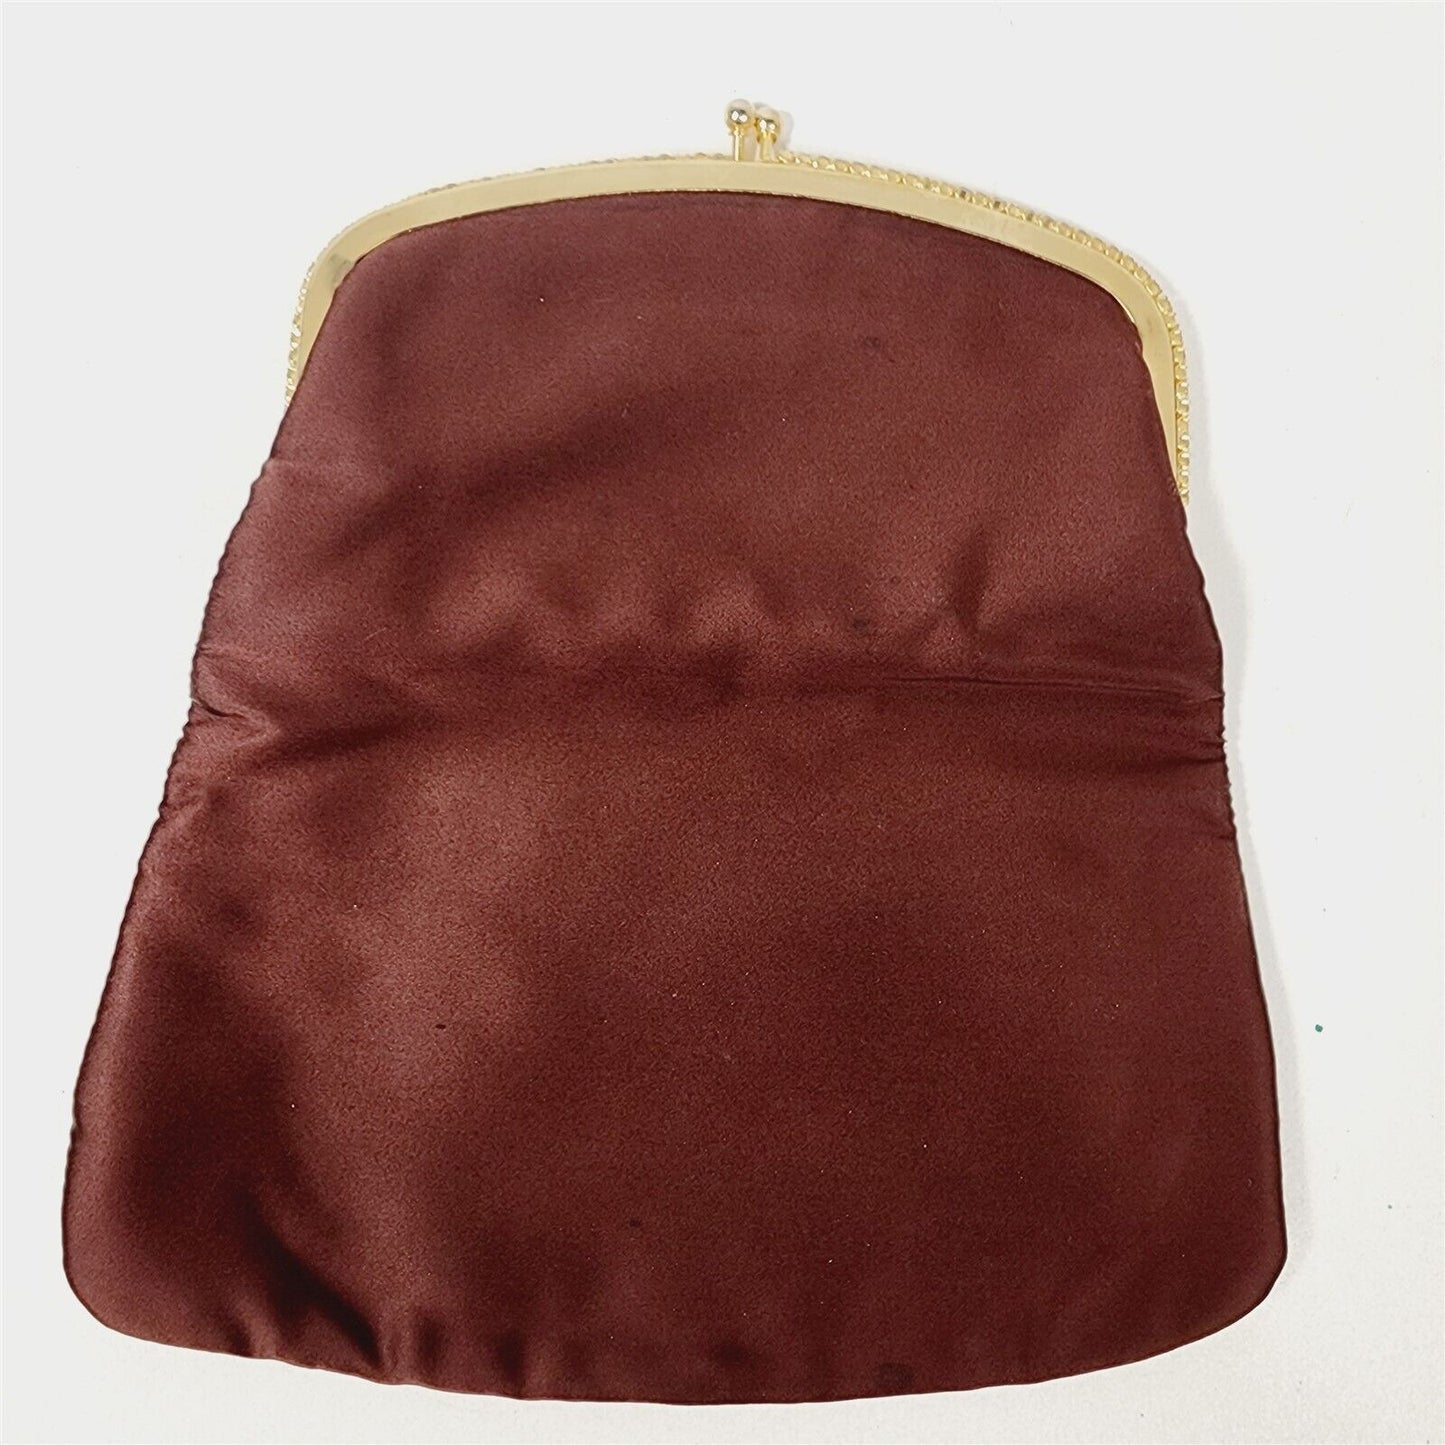 2 Vintage Kiss Clasp Clutch Evening Bags Purses Handbags Beaded Rhinestone